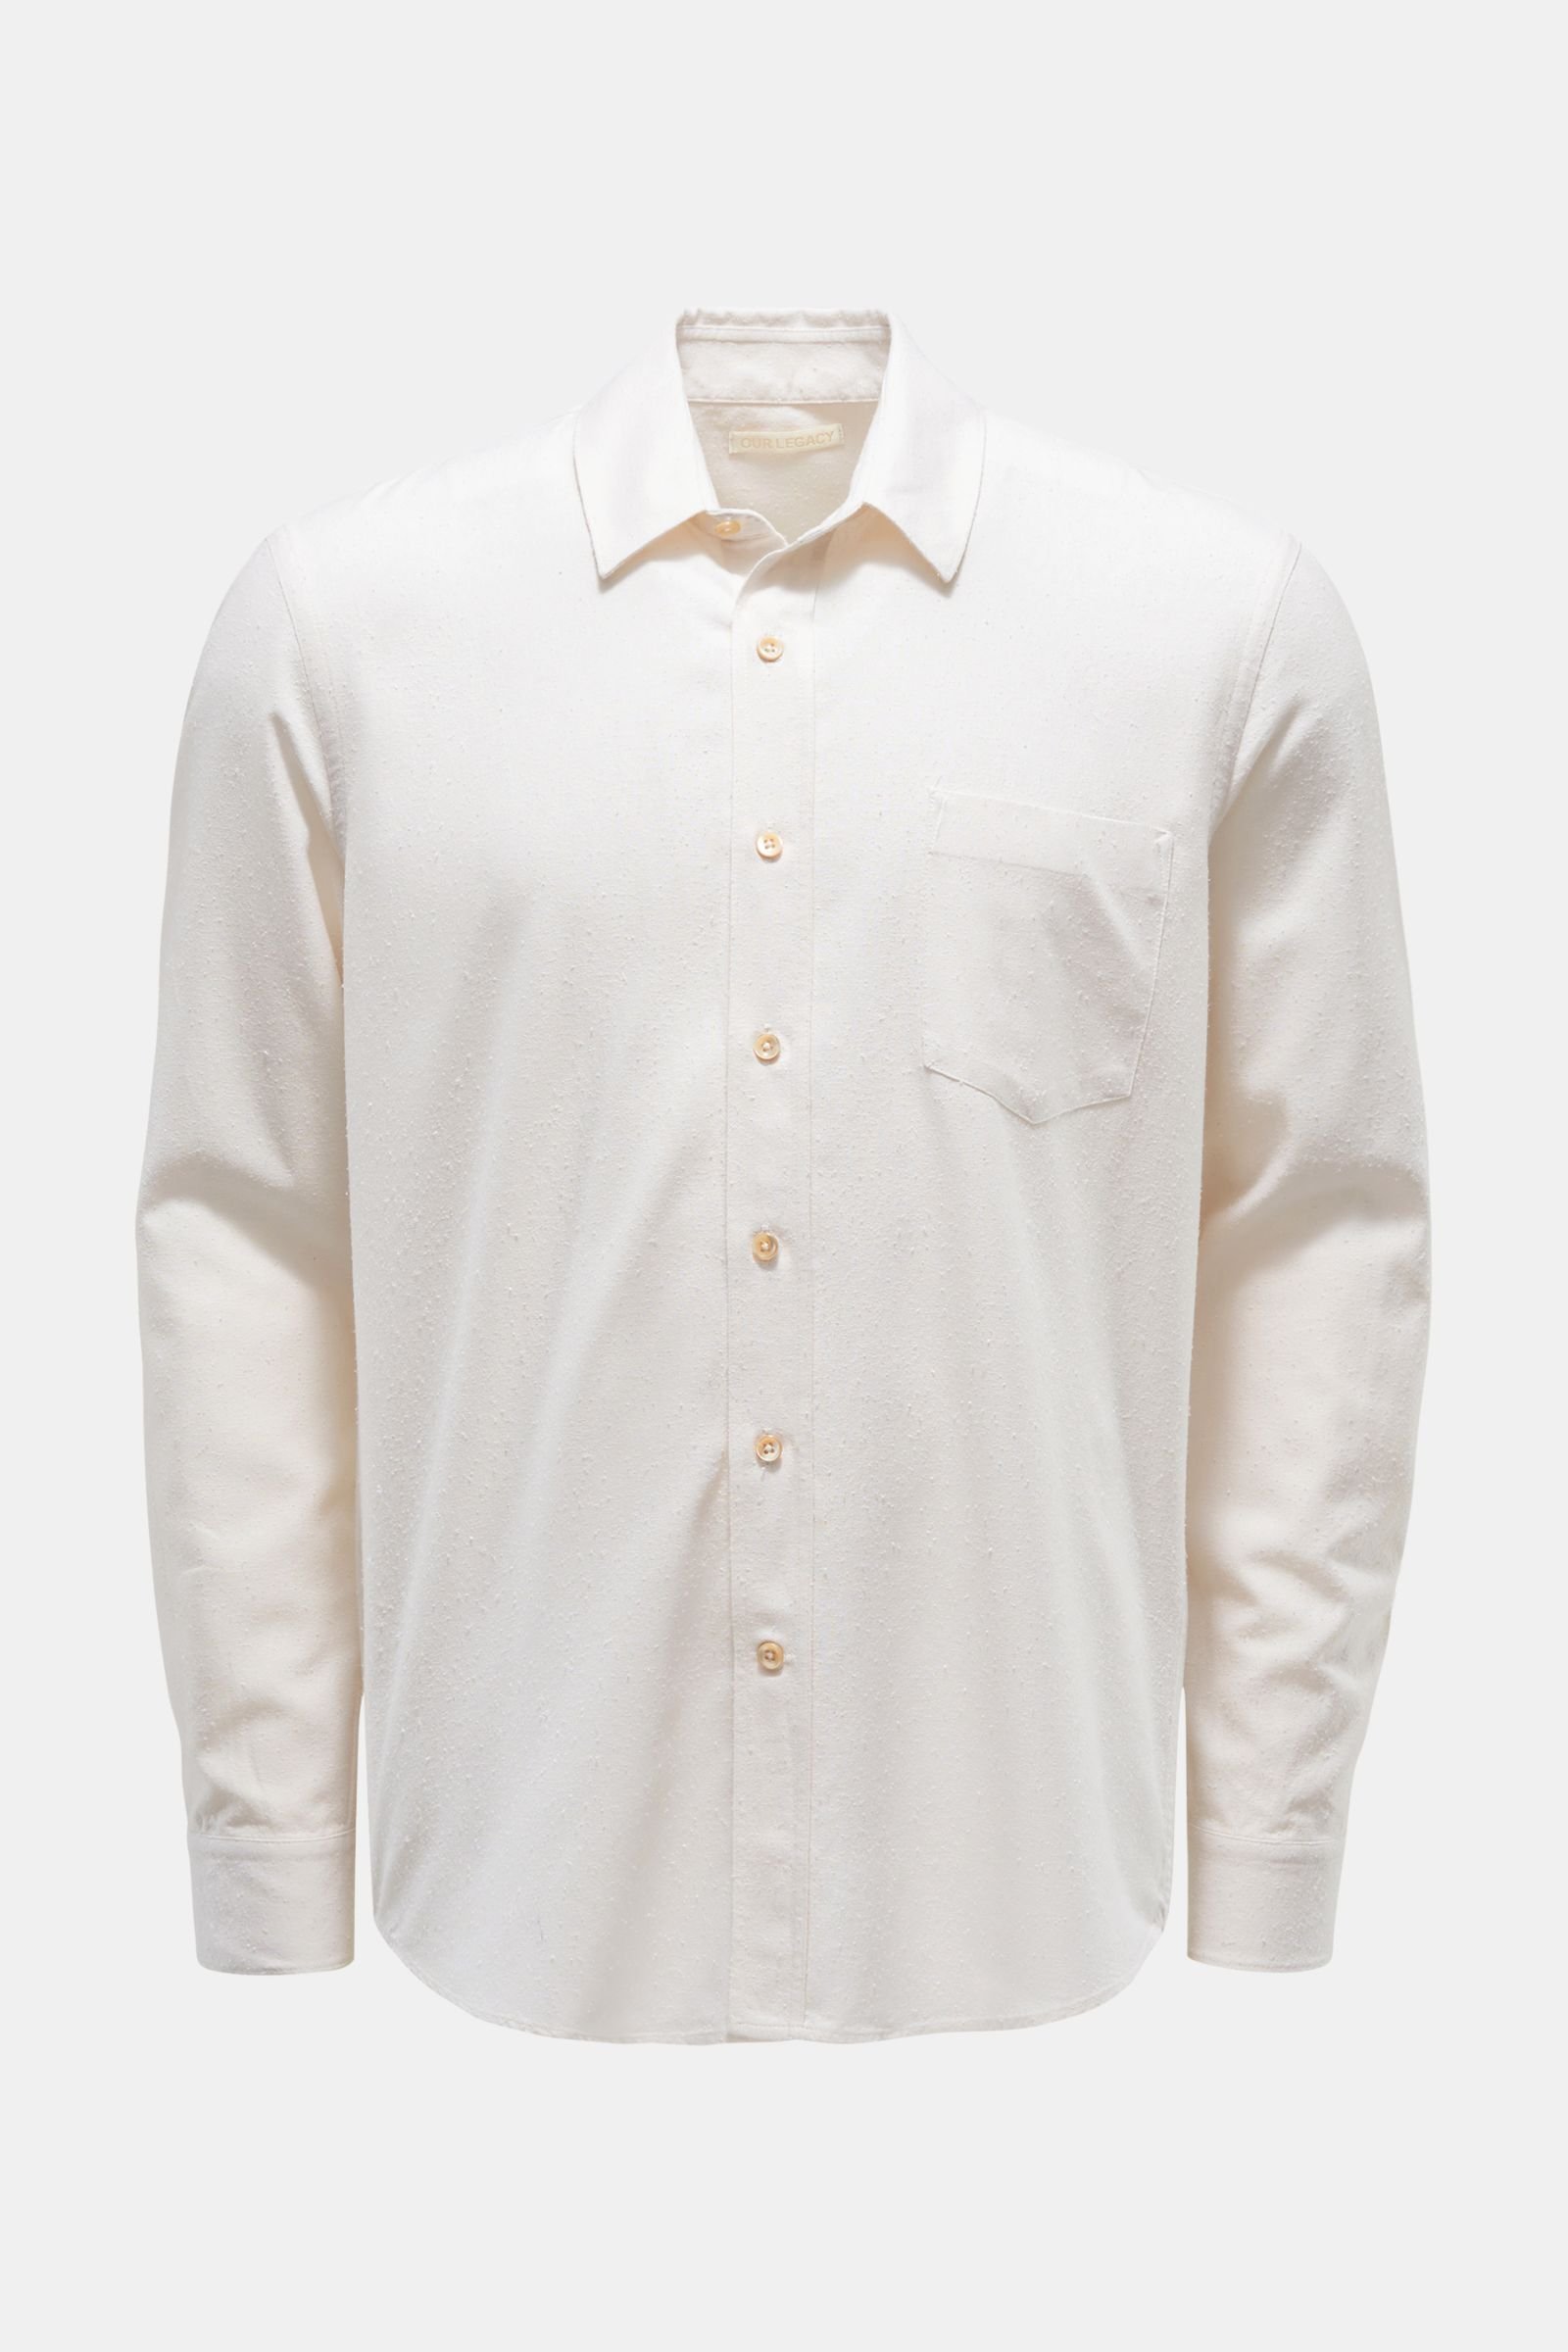 OUR LEGACY silk shirt 'Classic Shirt' narrow collar cream | BRAUN